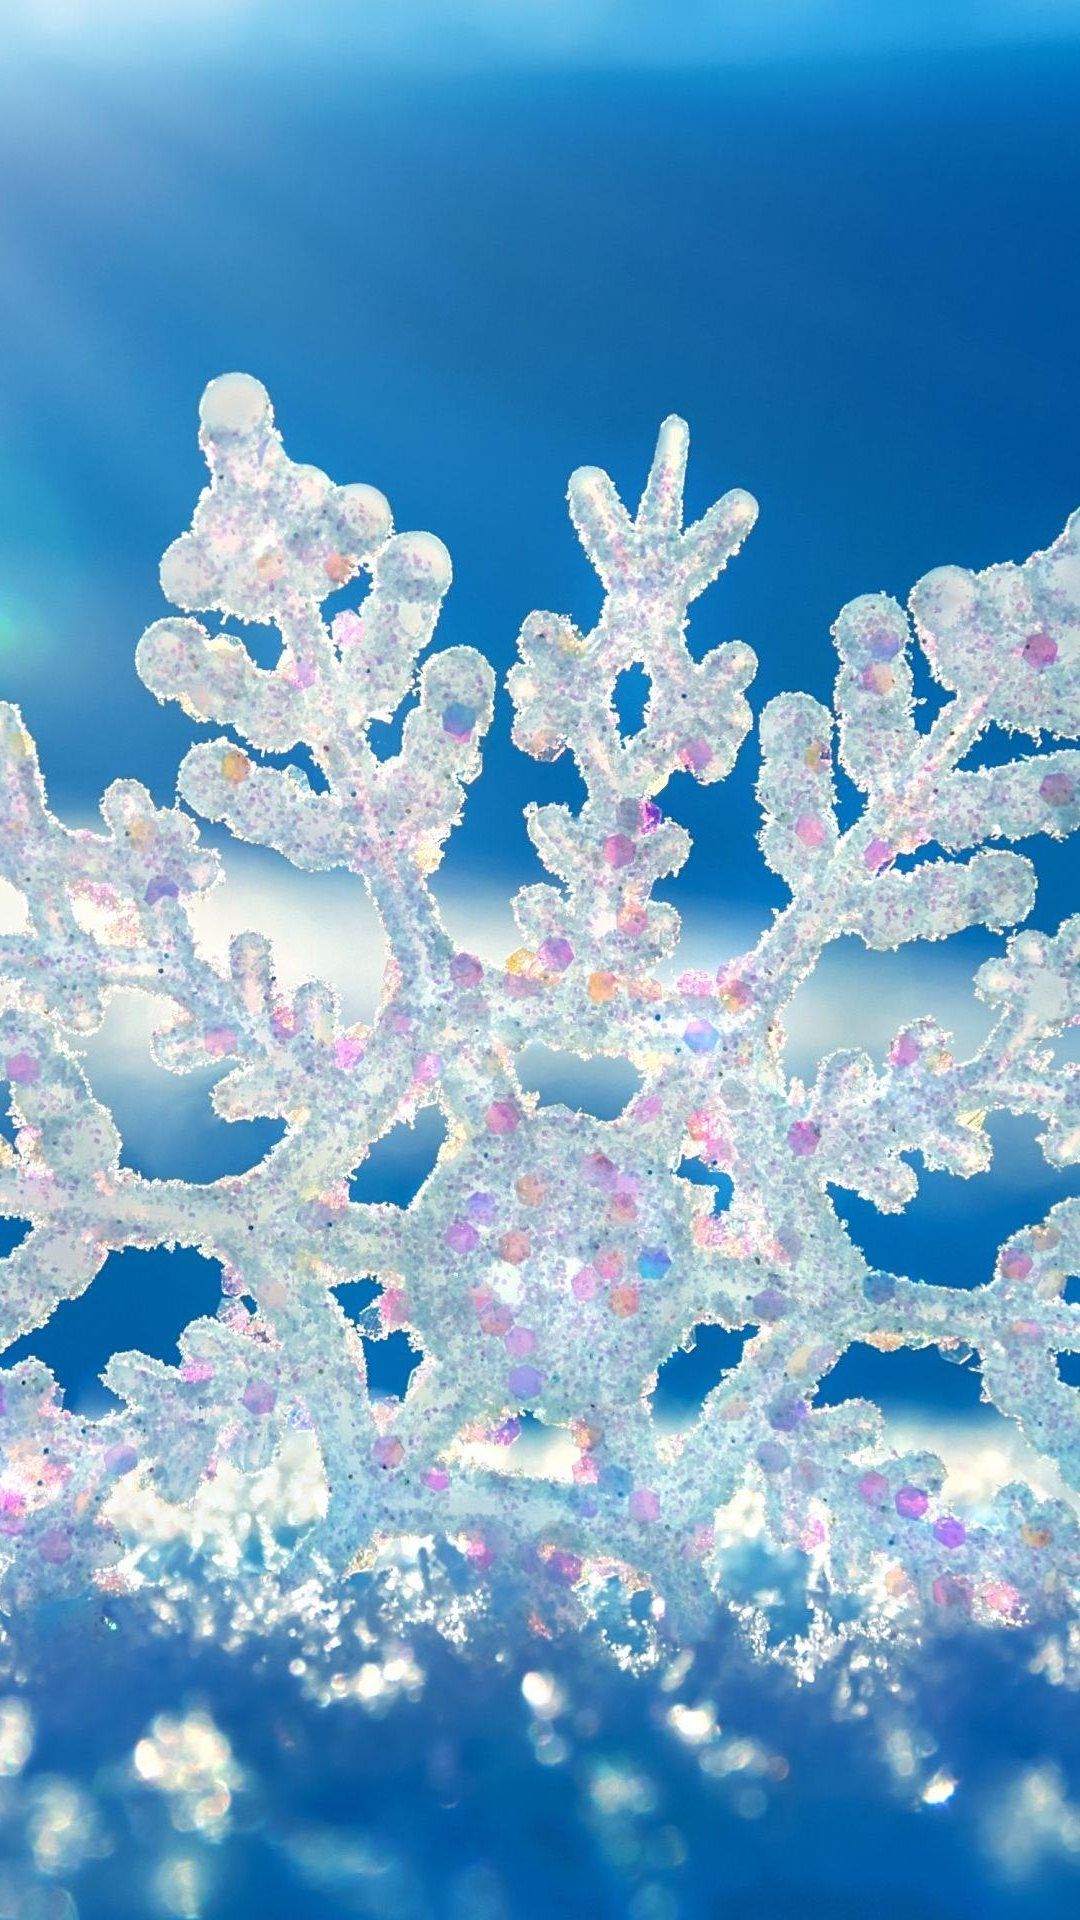 Macro Crystal Snowflake Android Wallpaper free download